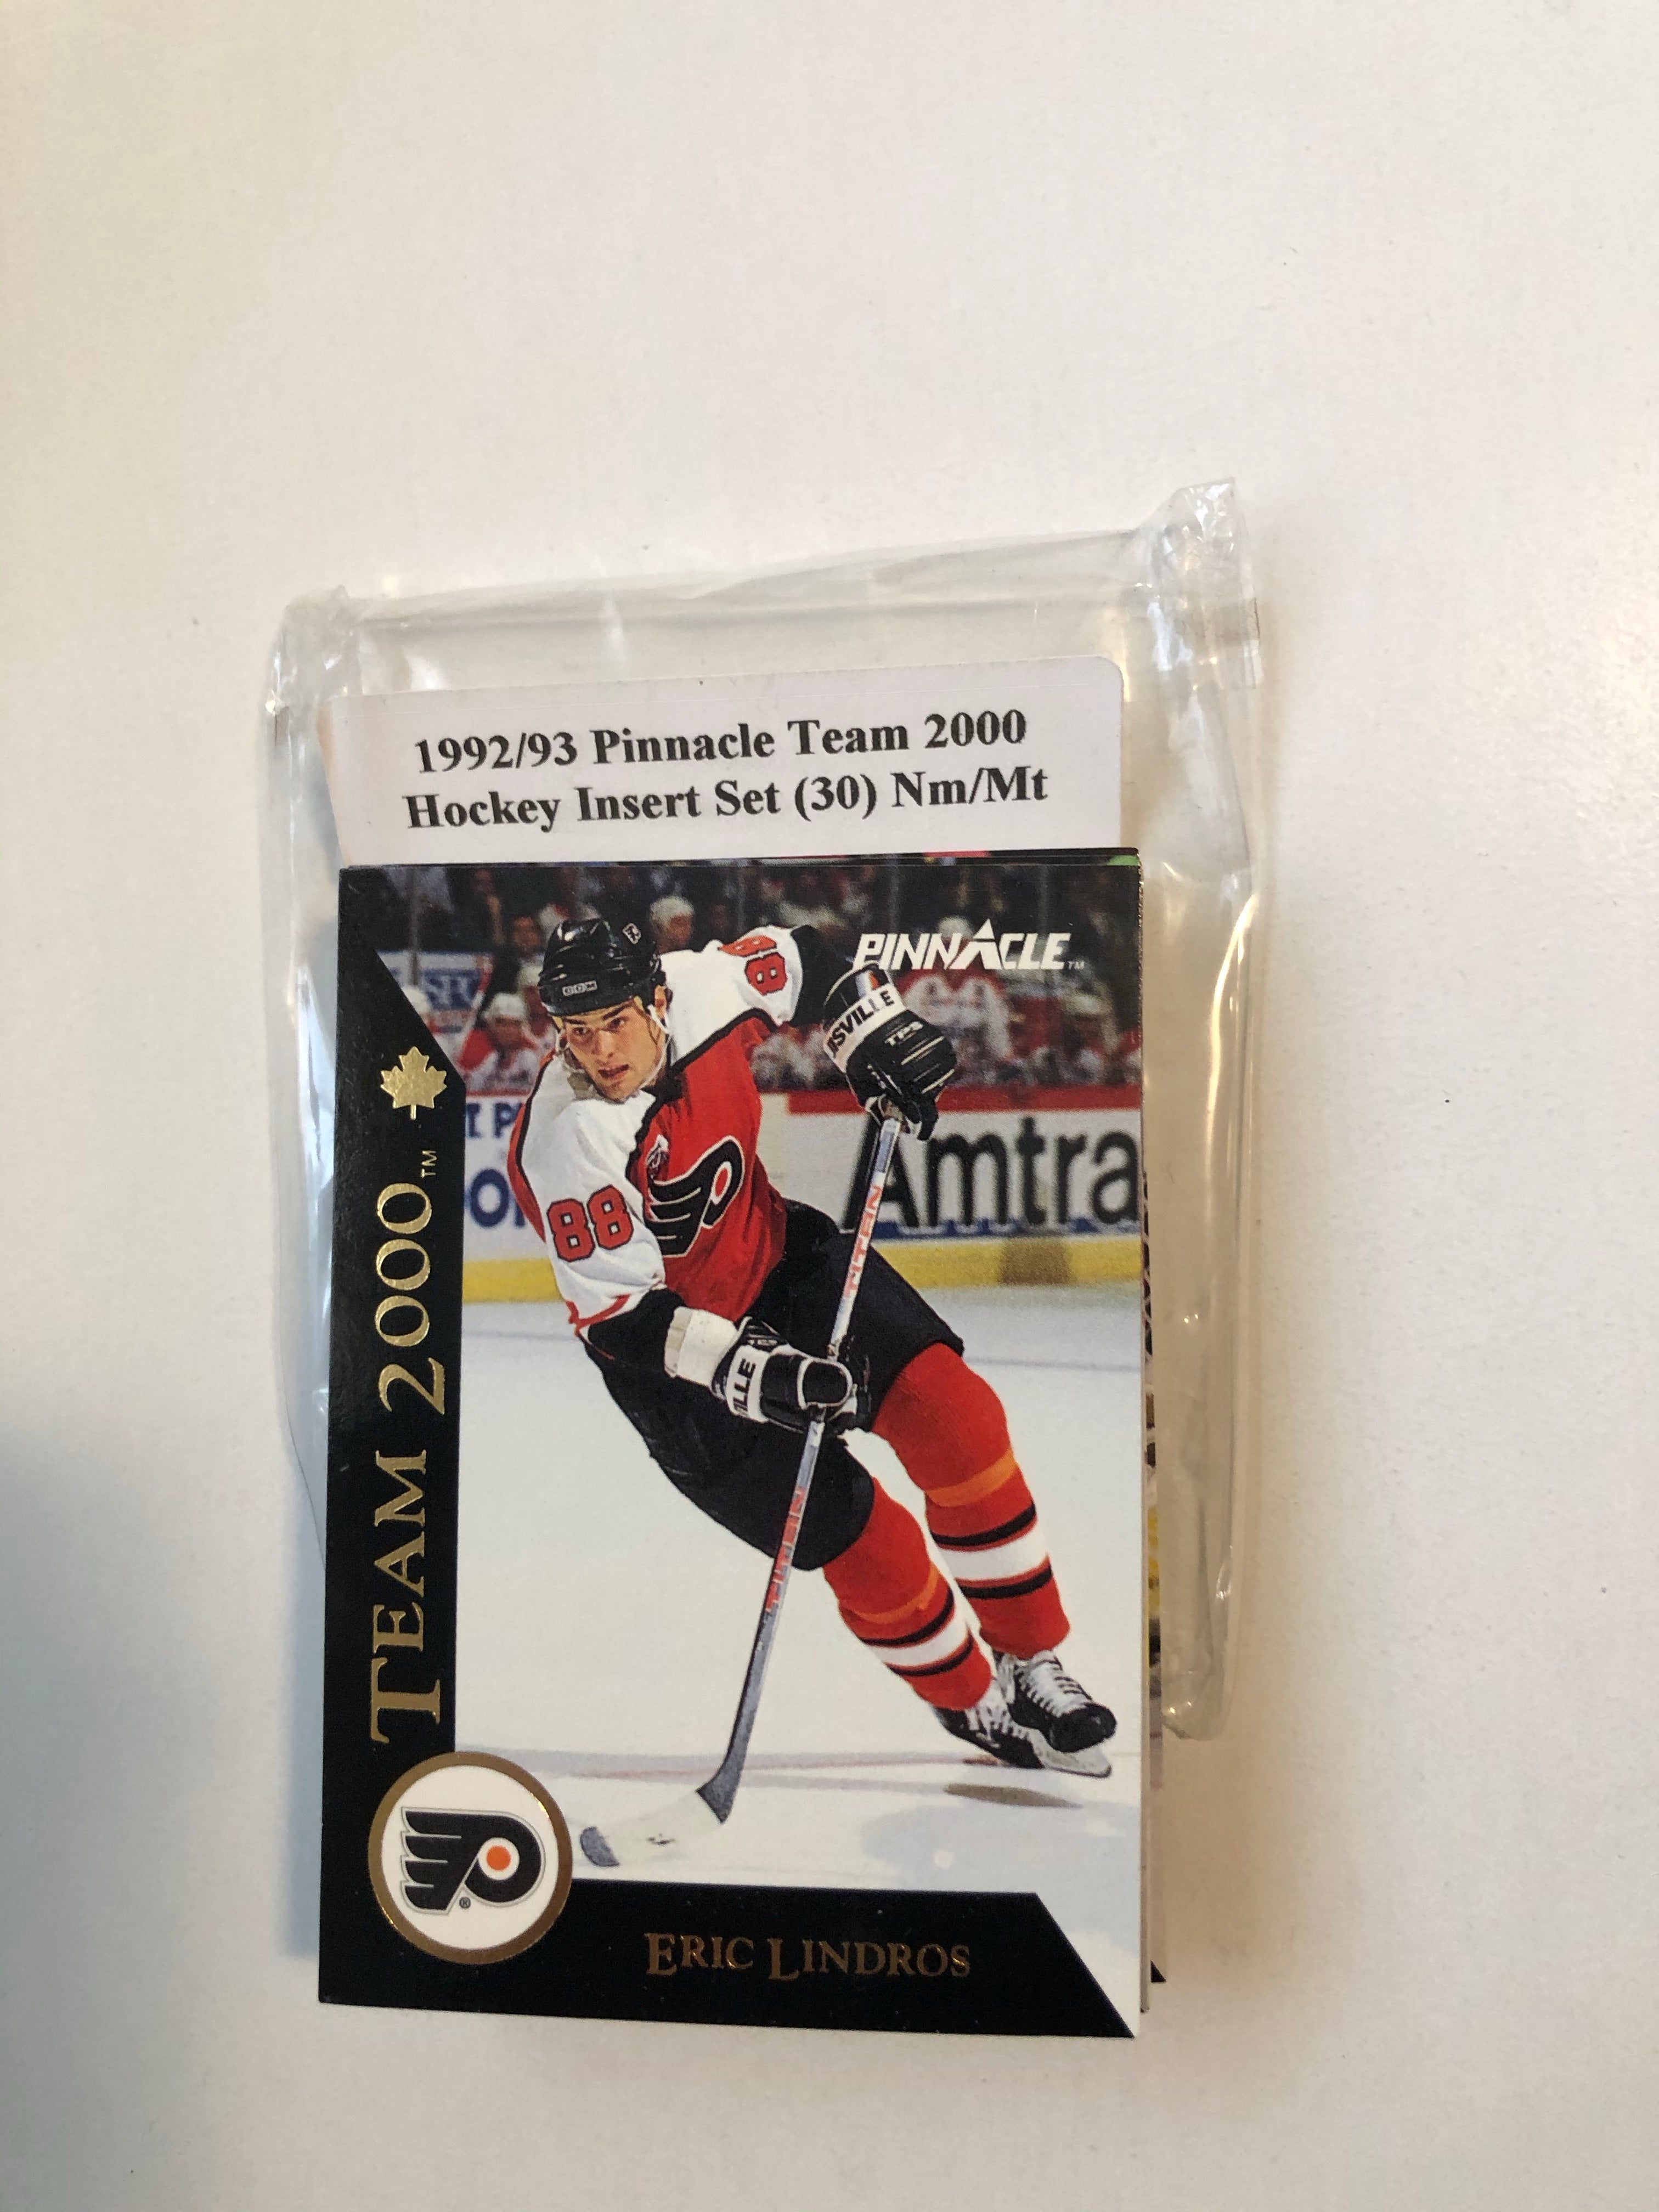 1992/93 Pinnacle team hockey insert cards set